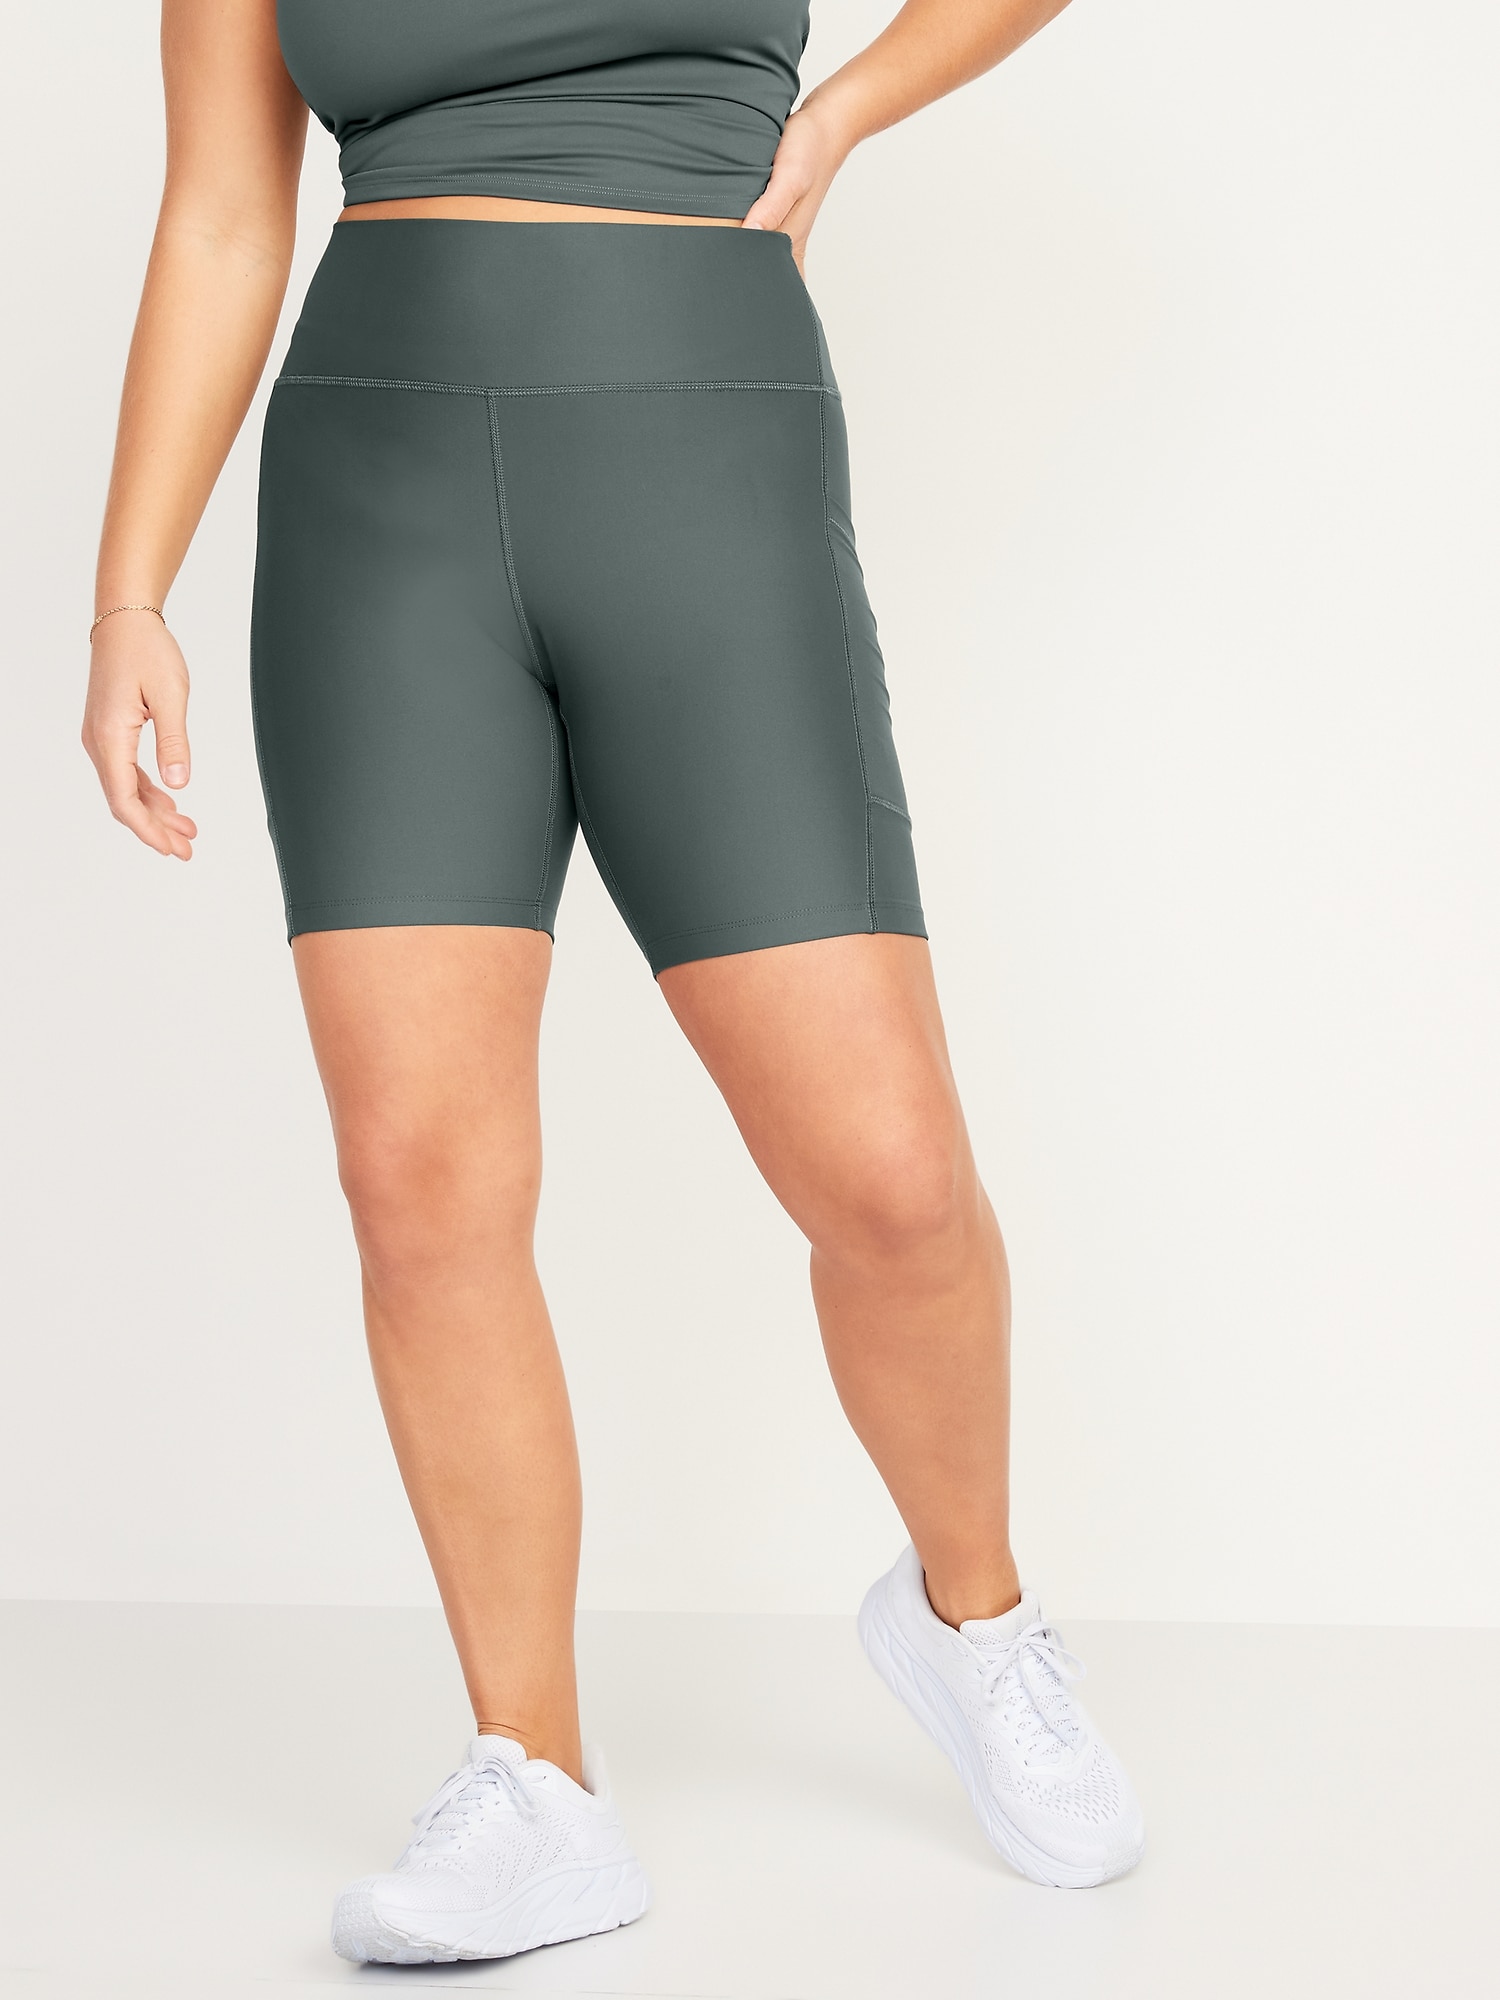 High-Waisted PowerSoft Biker Shorts -- 6-inch inseam